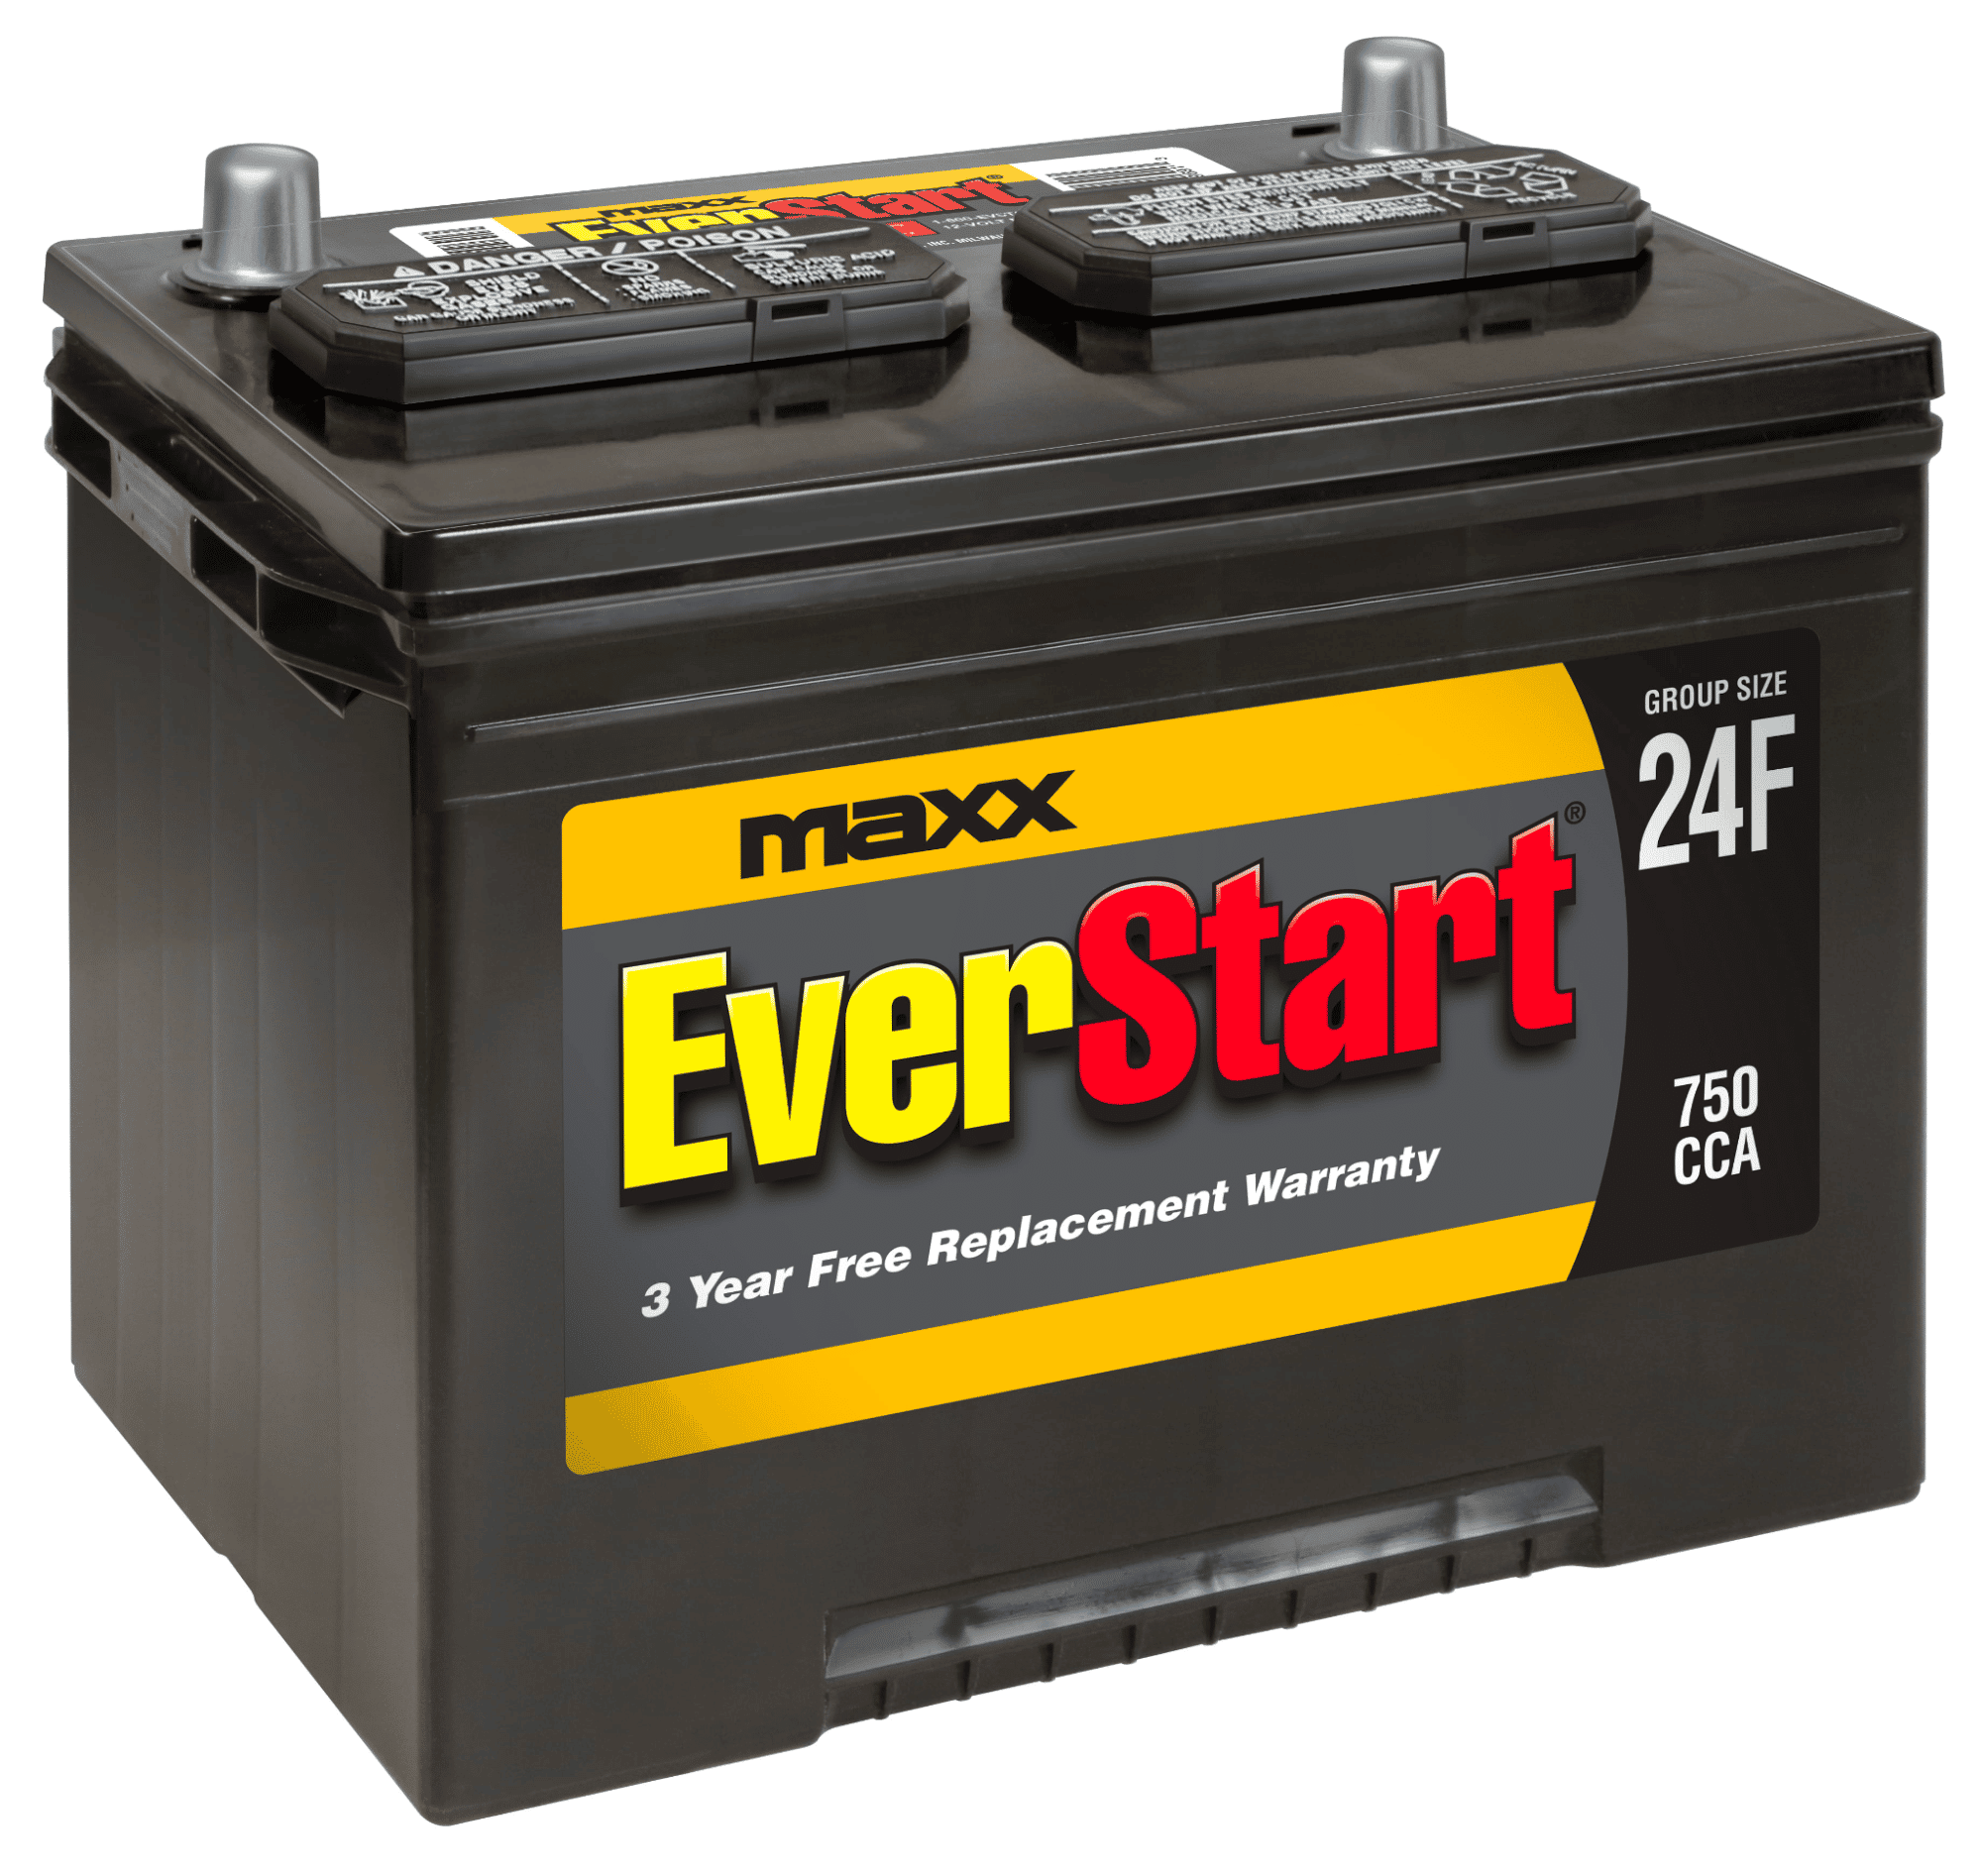 EverStart Maxx Lead Acid Automative Battery